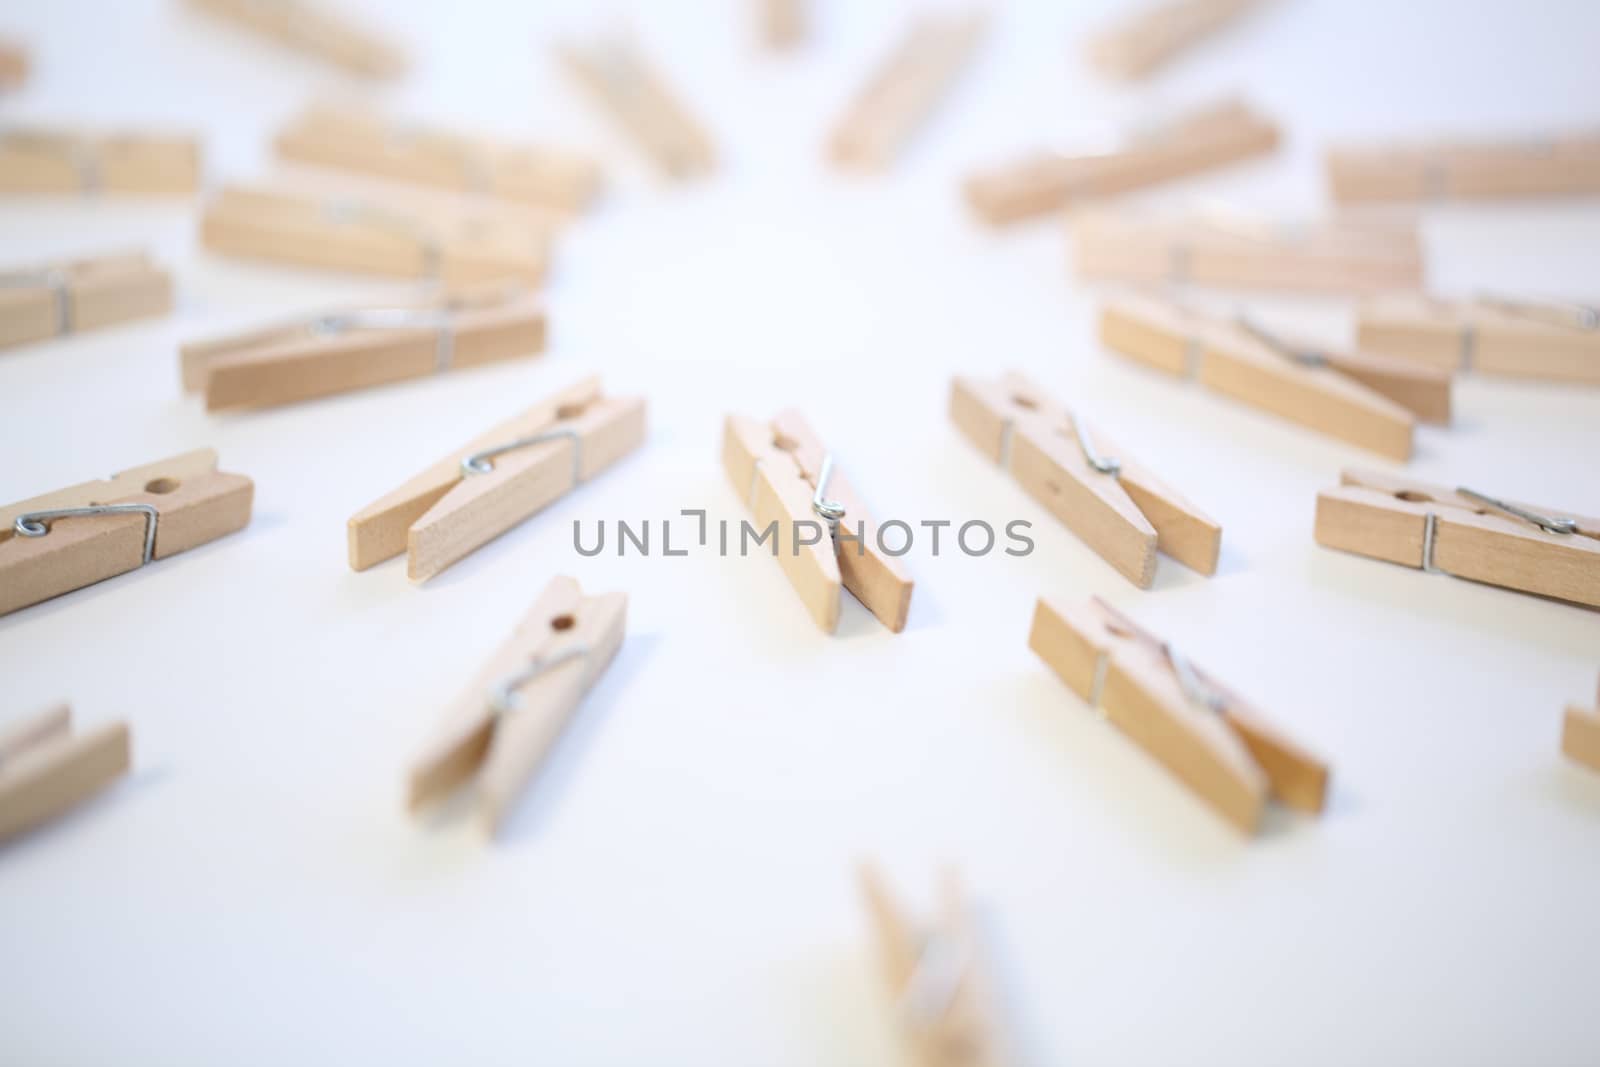 clothespins by sagasan